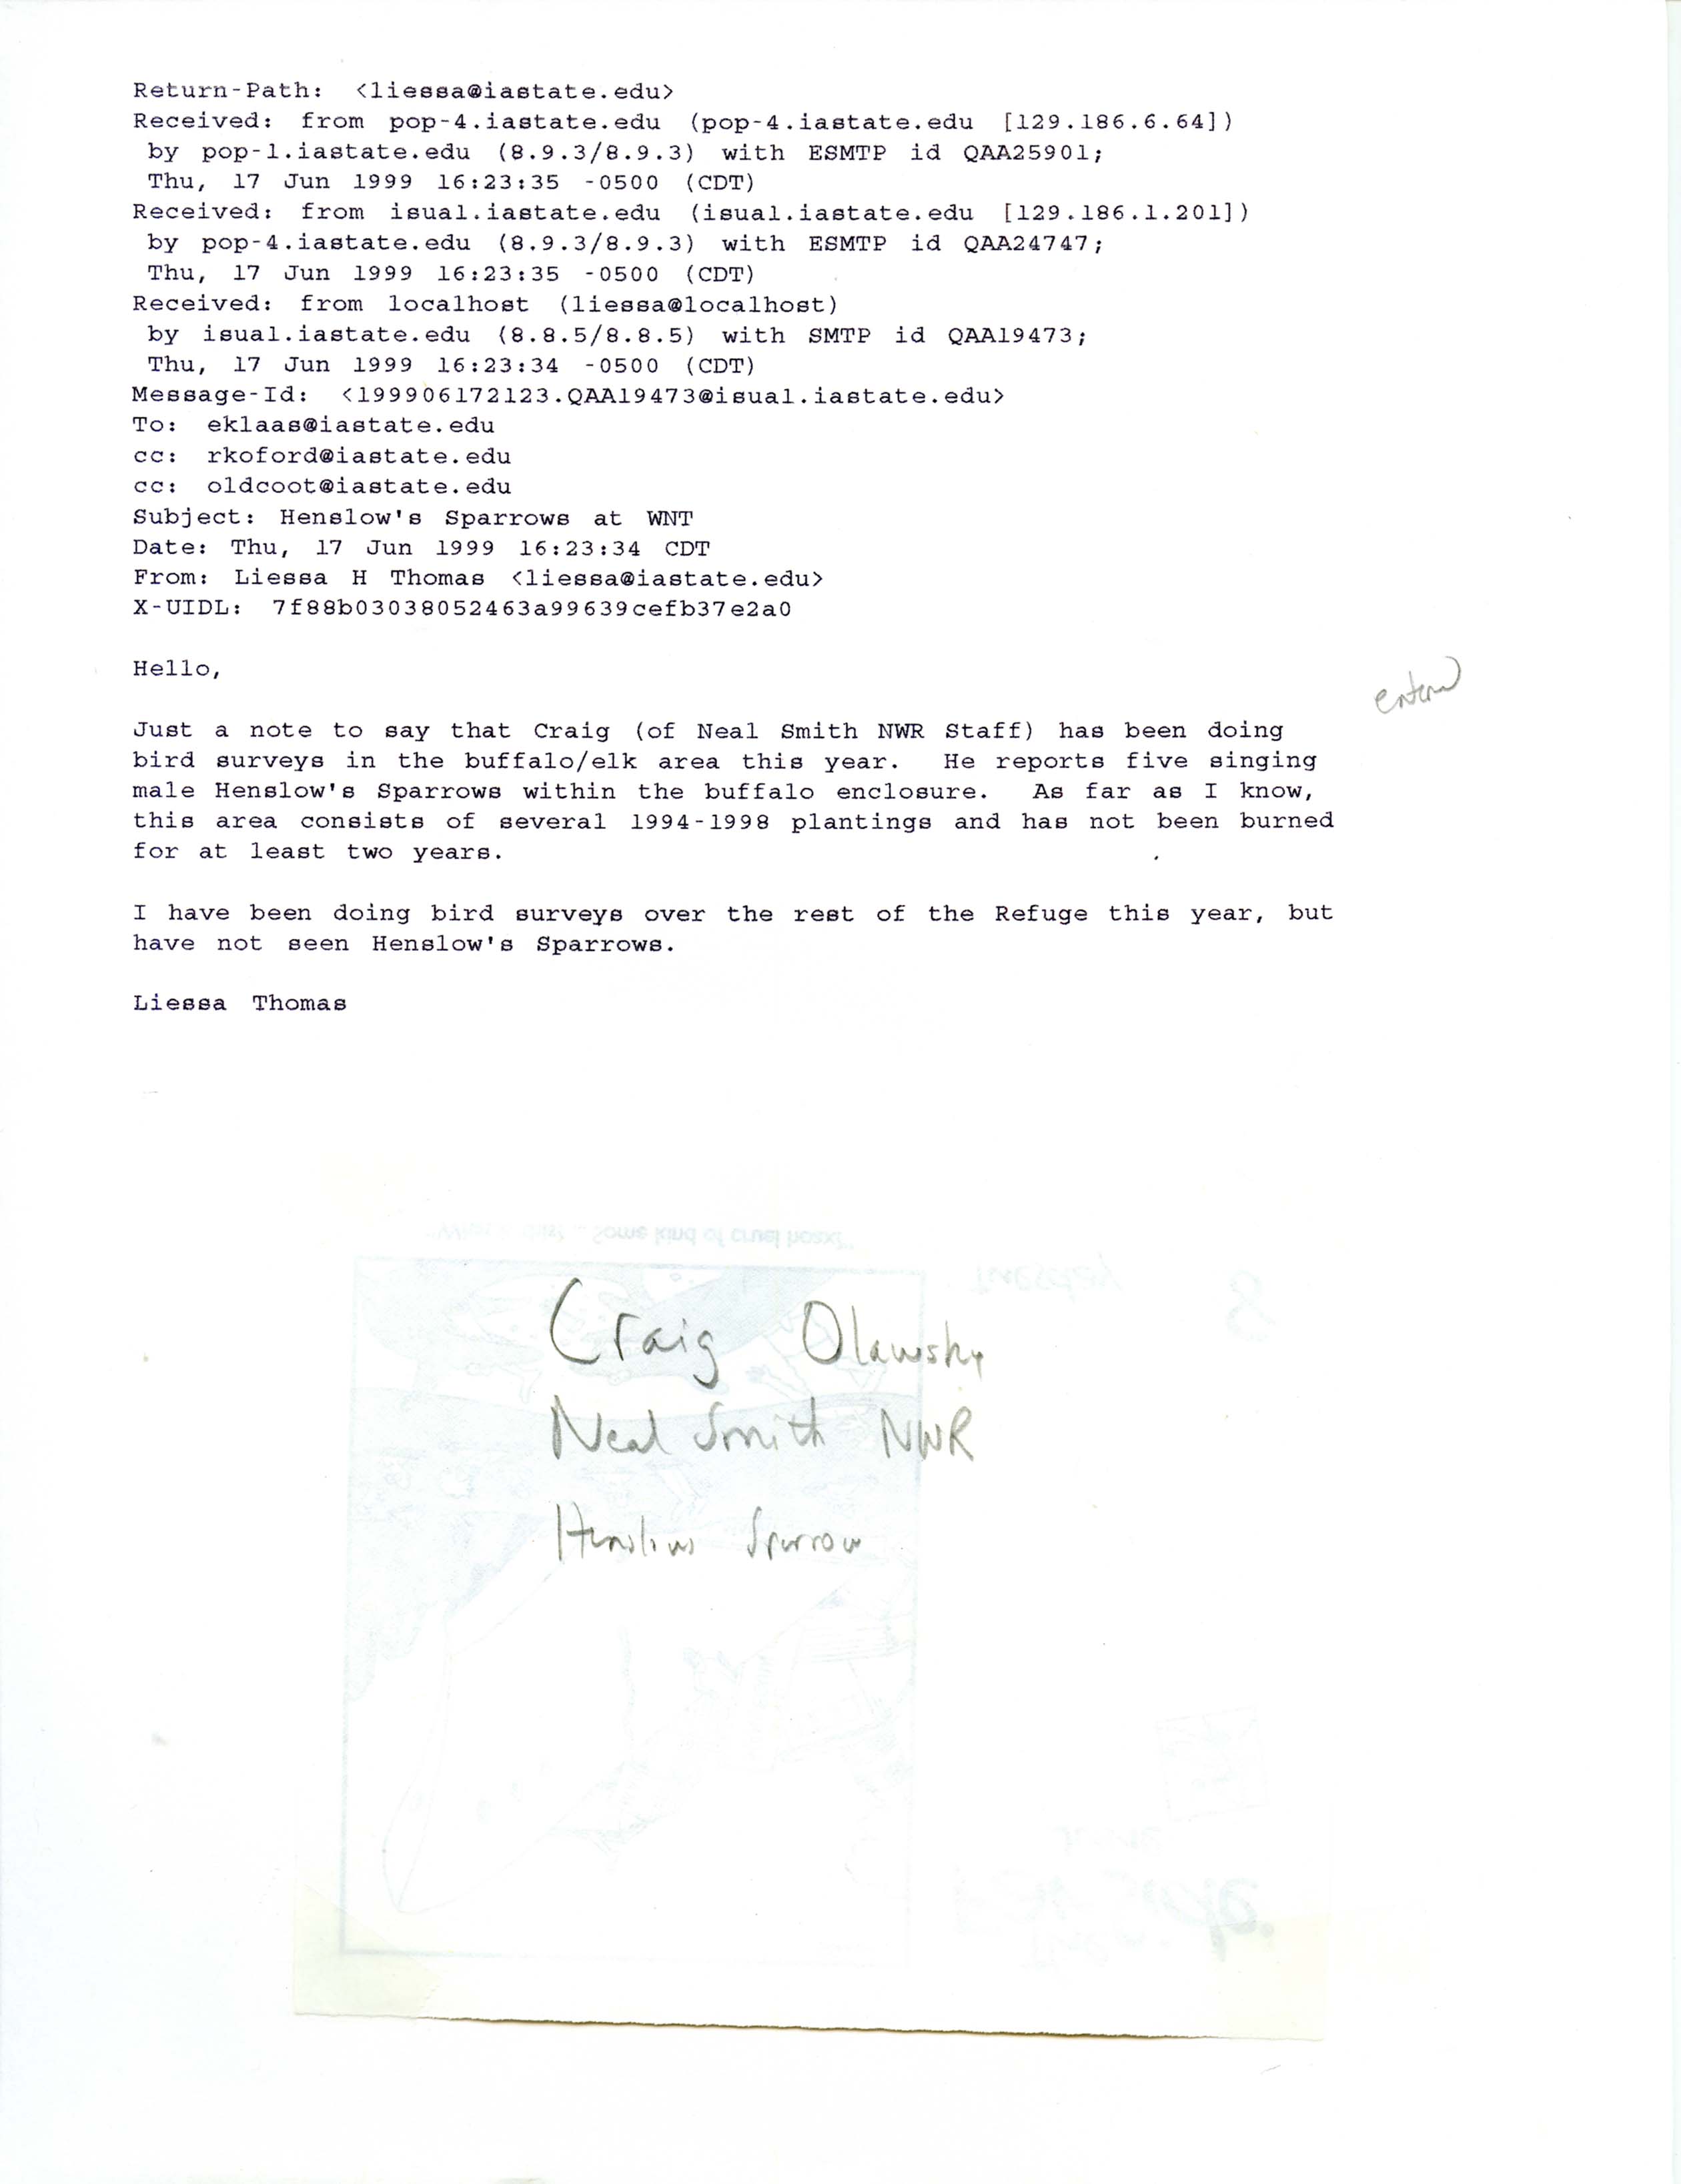 Liessa Thomas email to Jim Dinsmore regarding Henslow's Sparrow sighting, June 17, 1999